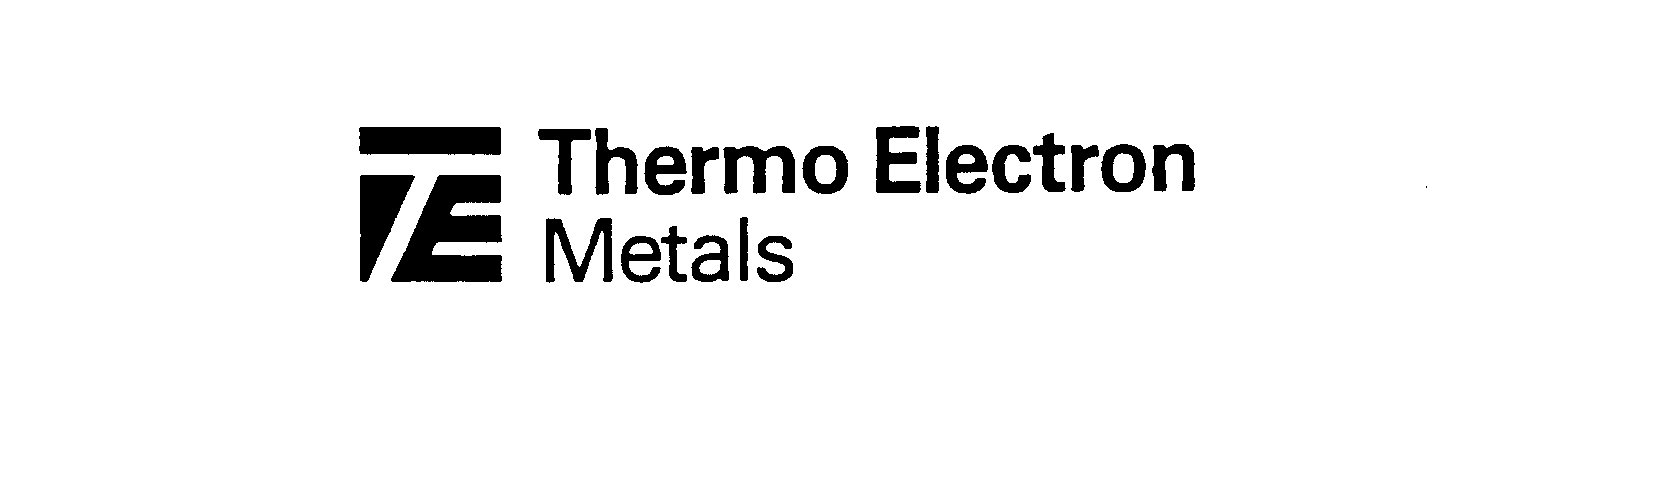  TE THERMO ELECTRON METALS